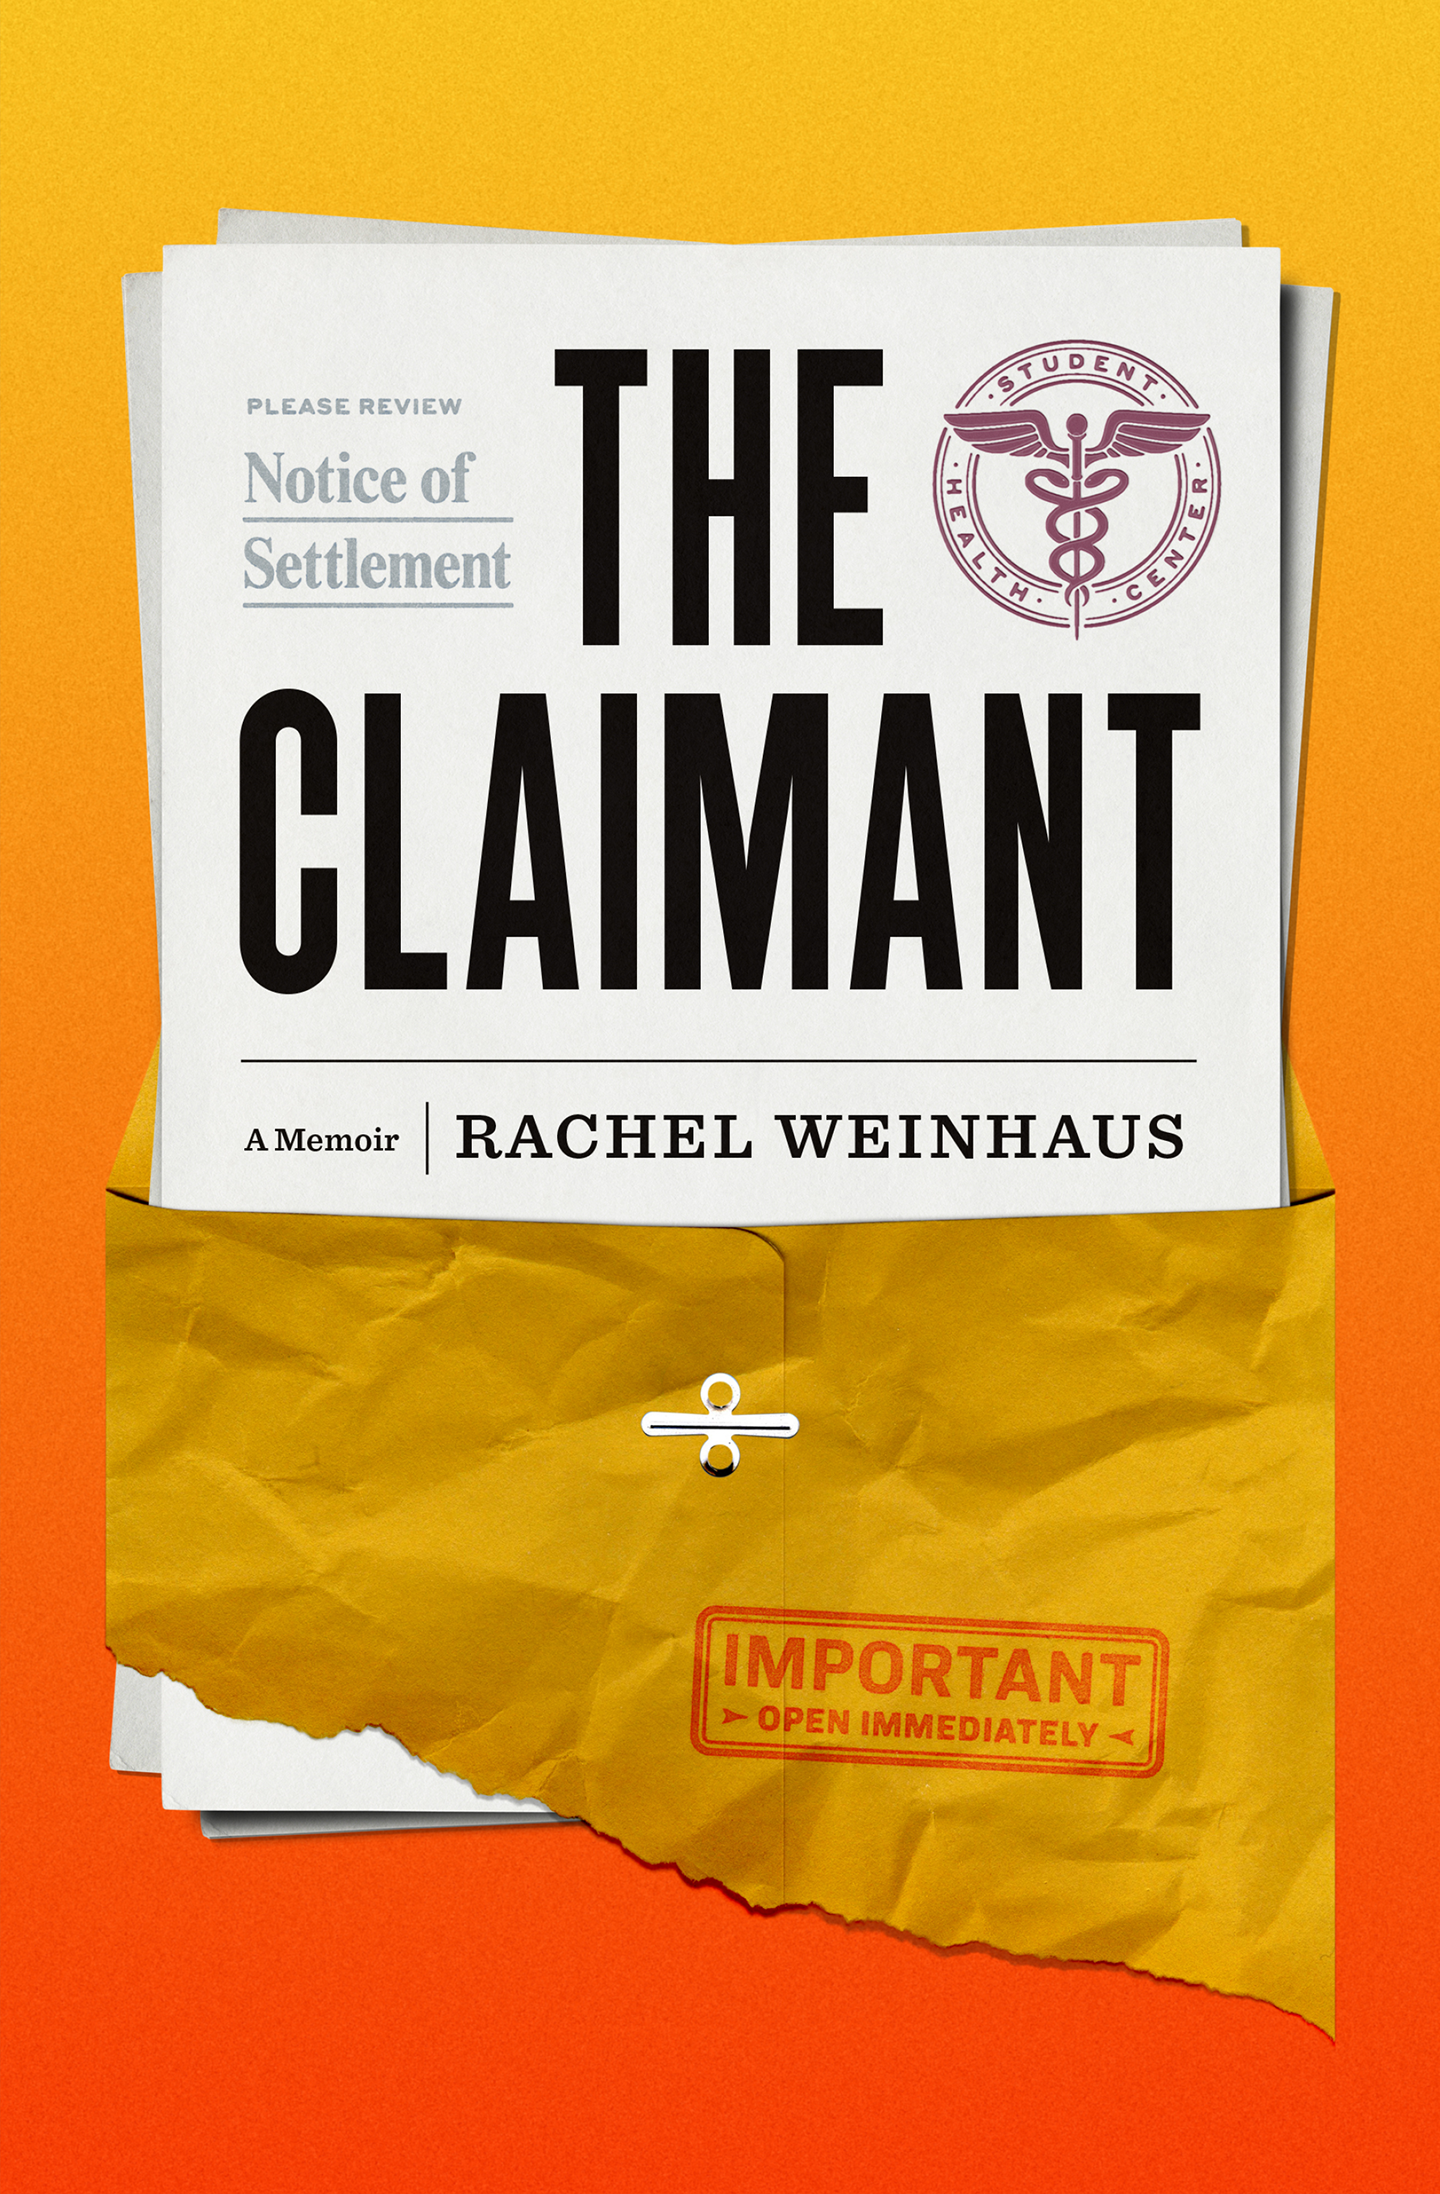 Rachel Weinhaus, author / THE CLAIMANT, photo image